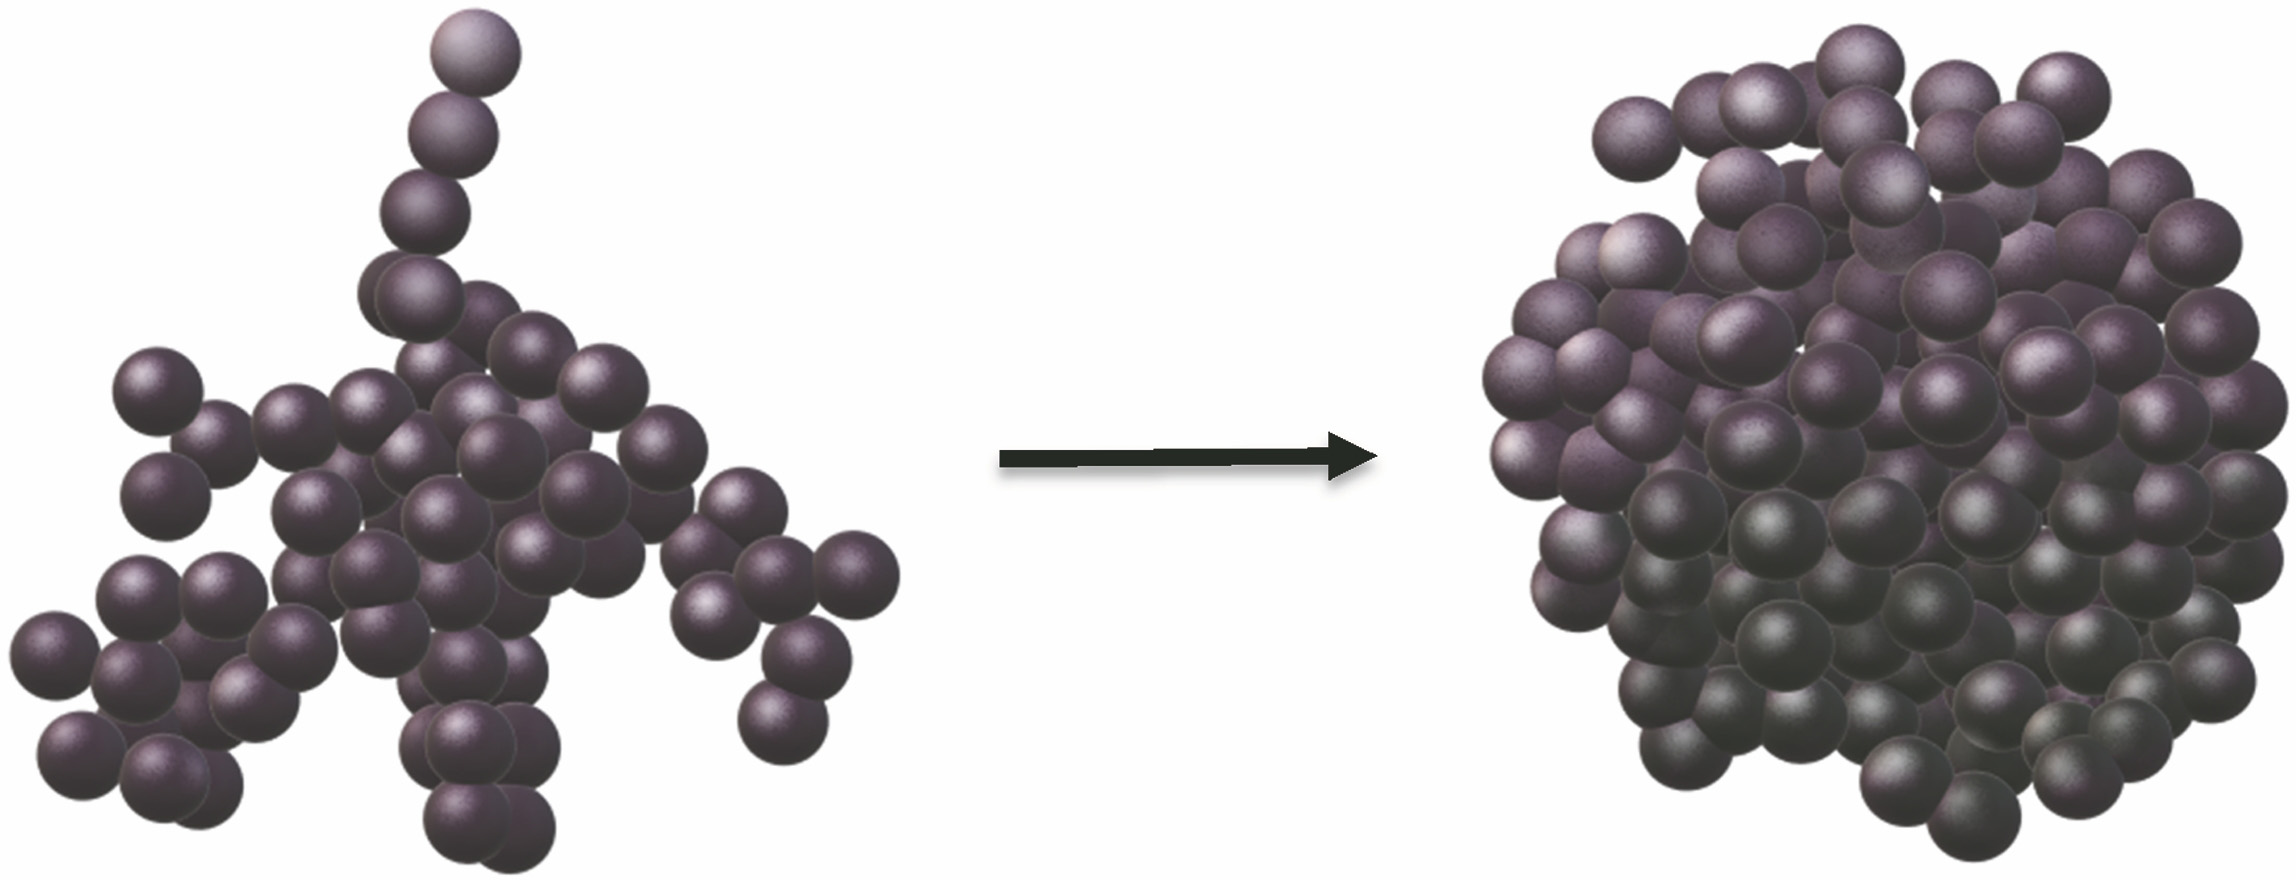 Physical equivalent model of black carbon aerosol particles